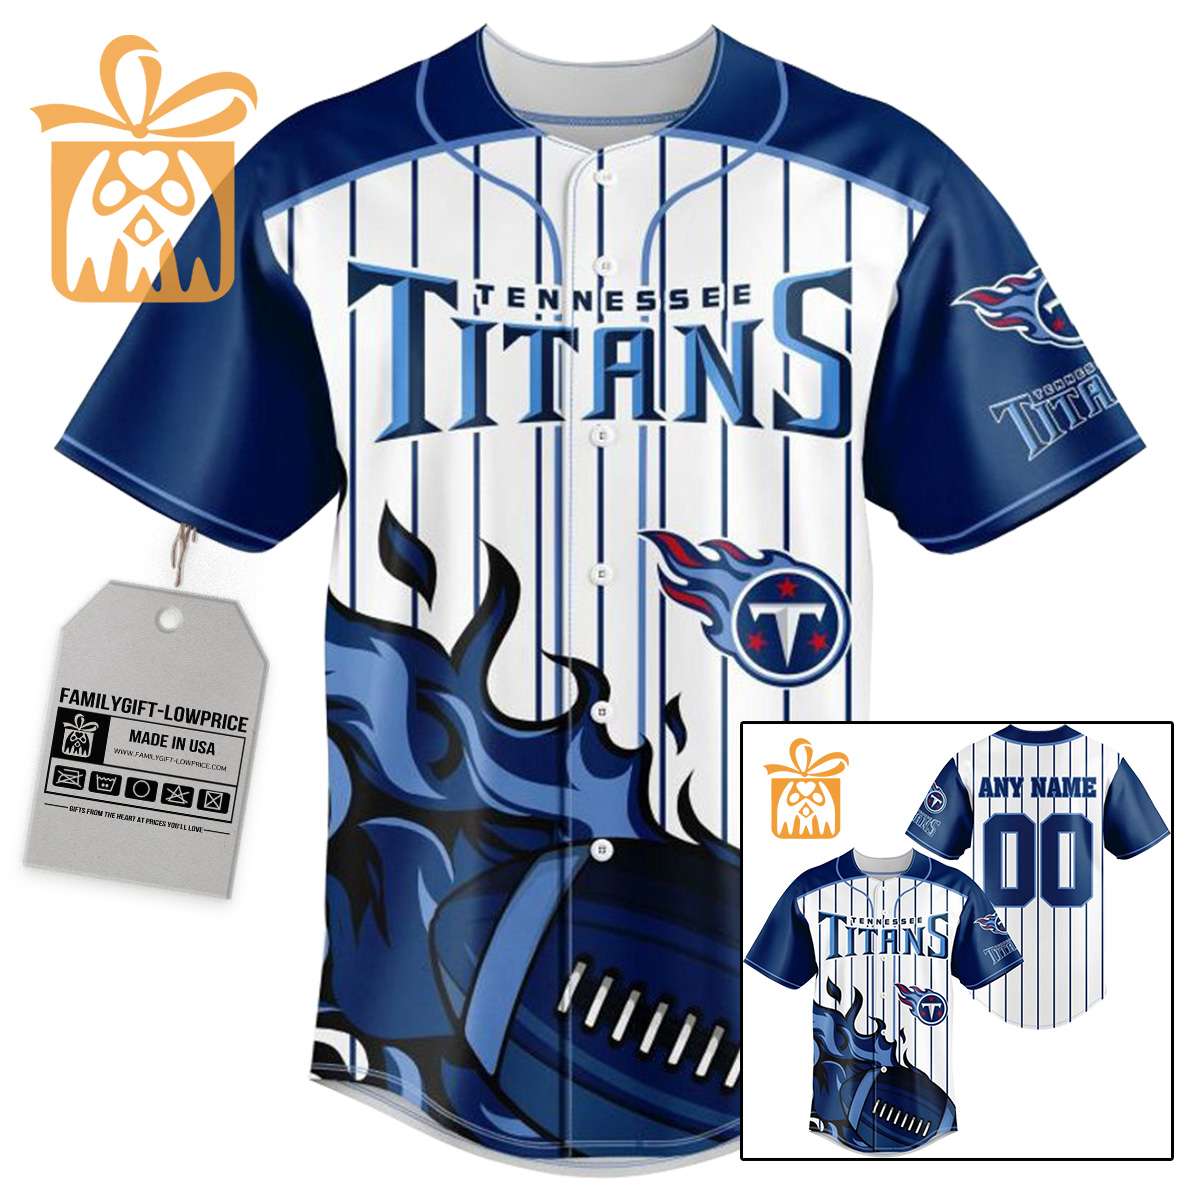 NFL Baseball Jersey - Tennessee Titans Baseball Jersey TShirt - Personalized Baseball Jerseys